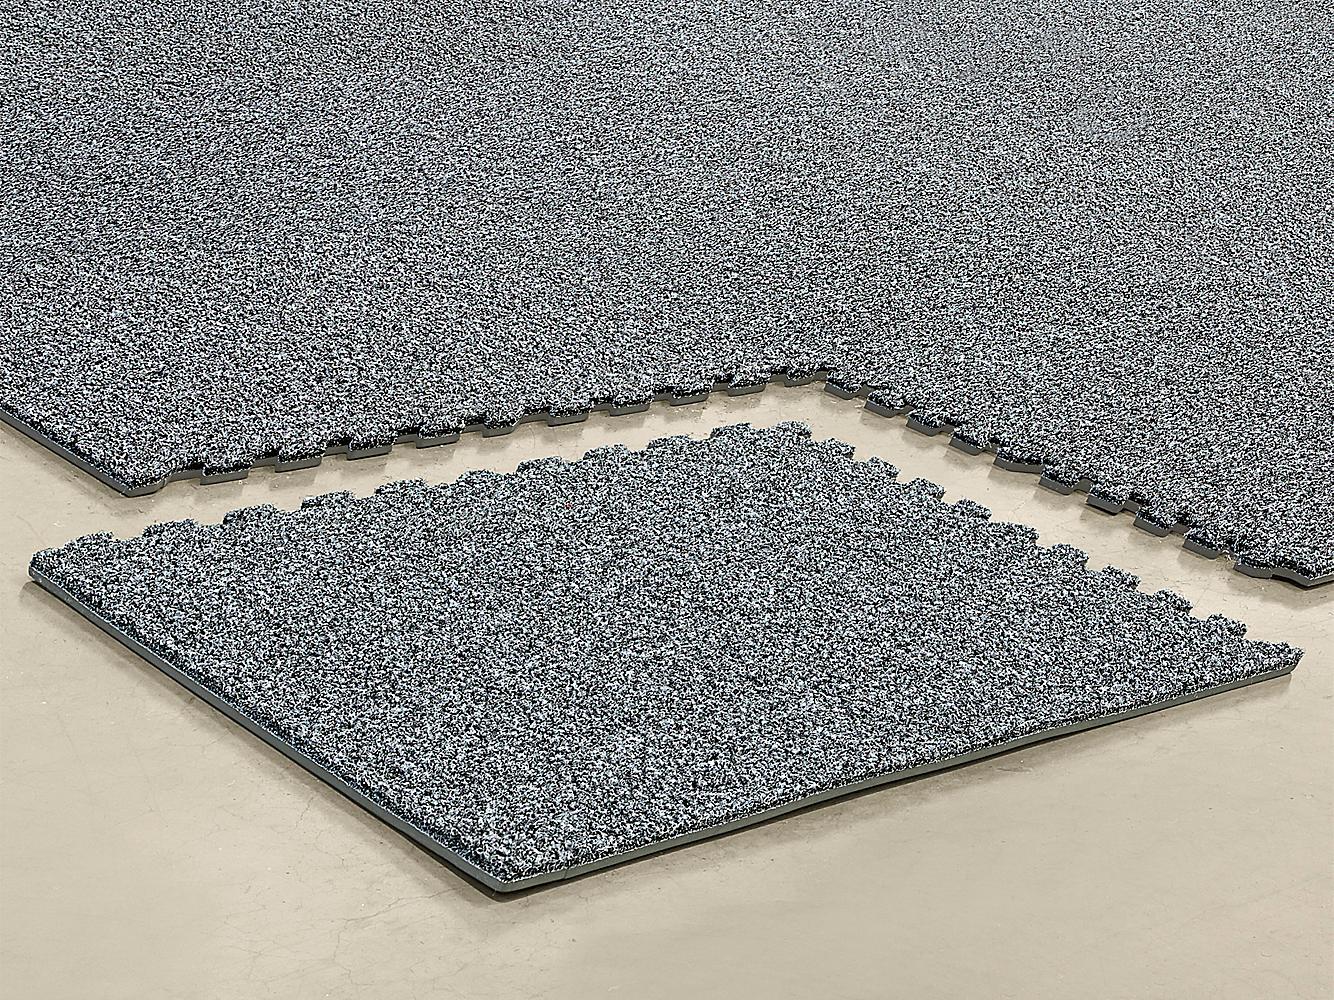 Carpet Tiles 